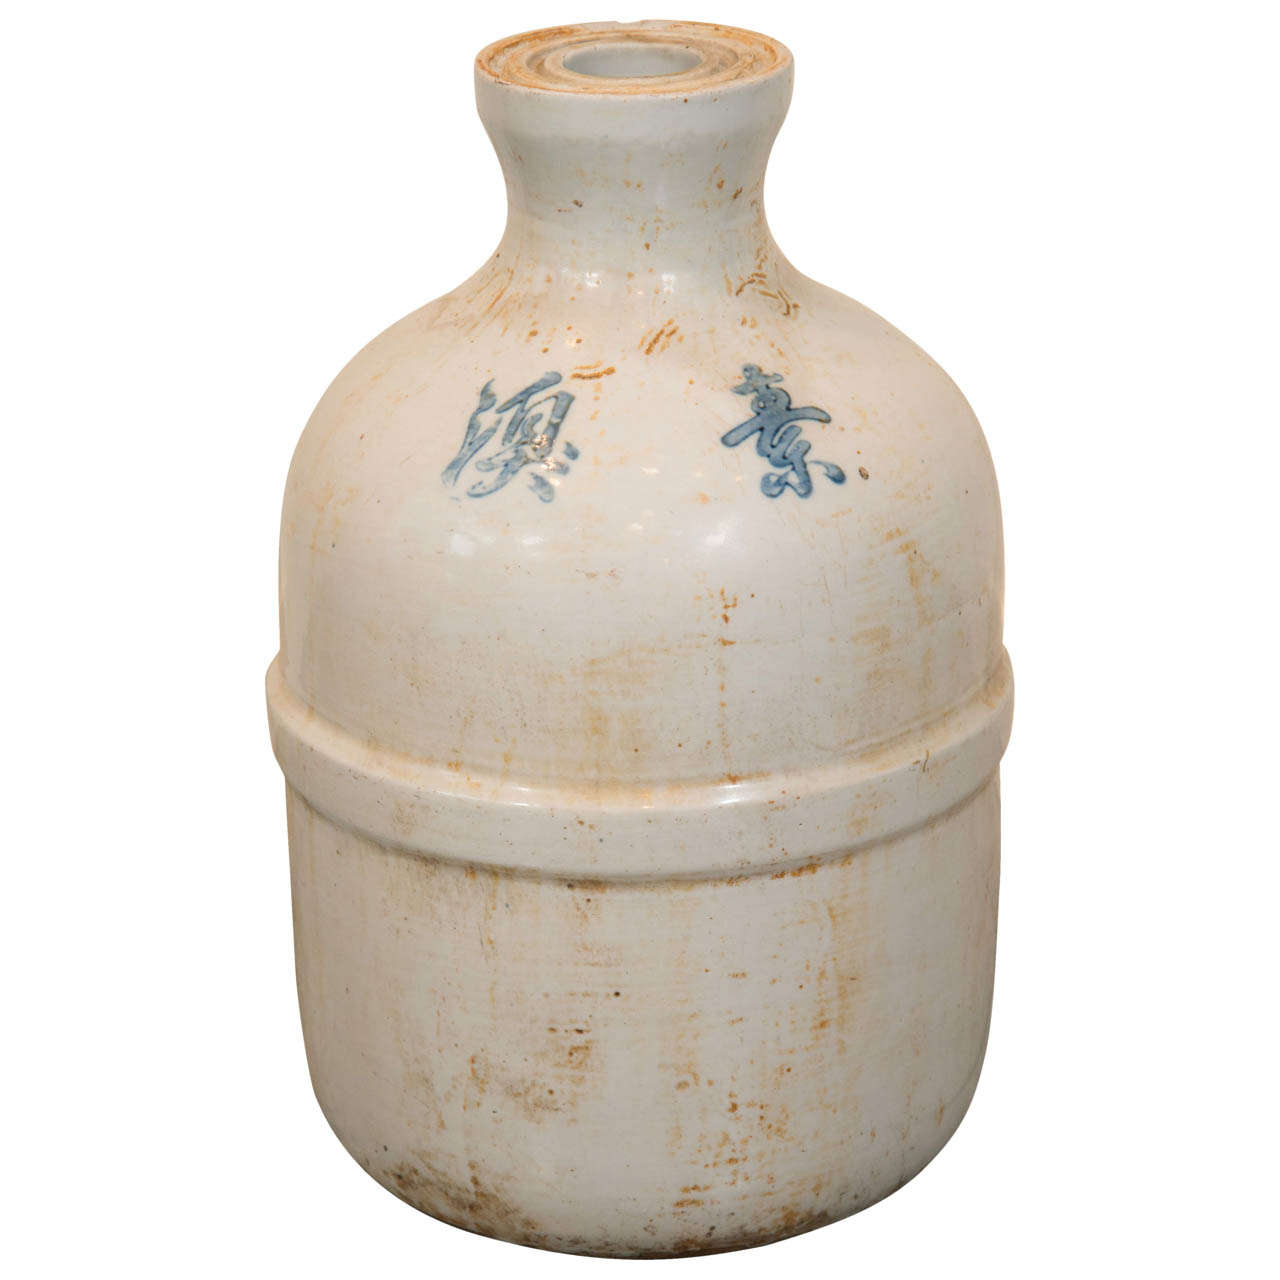 Unusual Chinese Porcelain Wine Jar